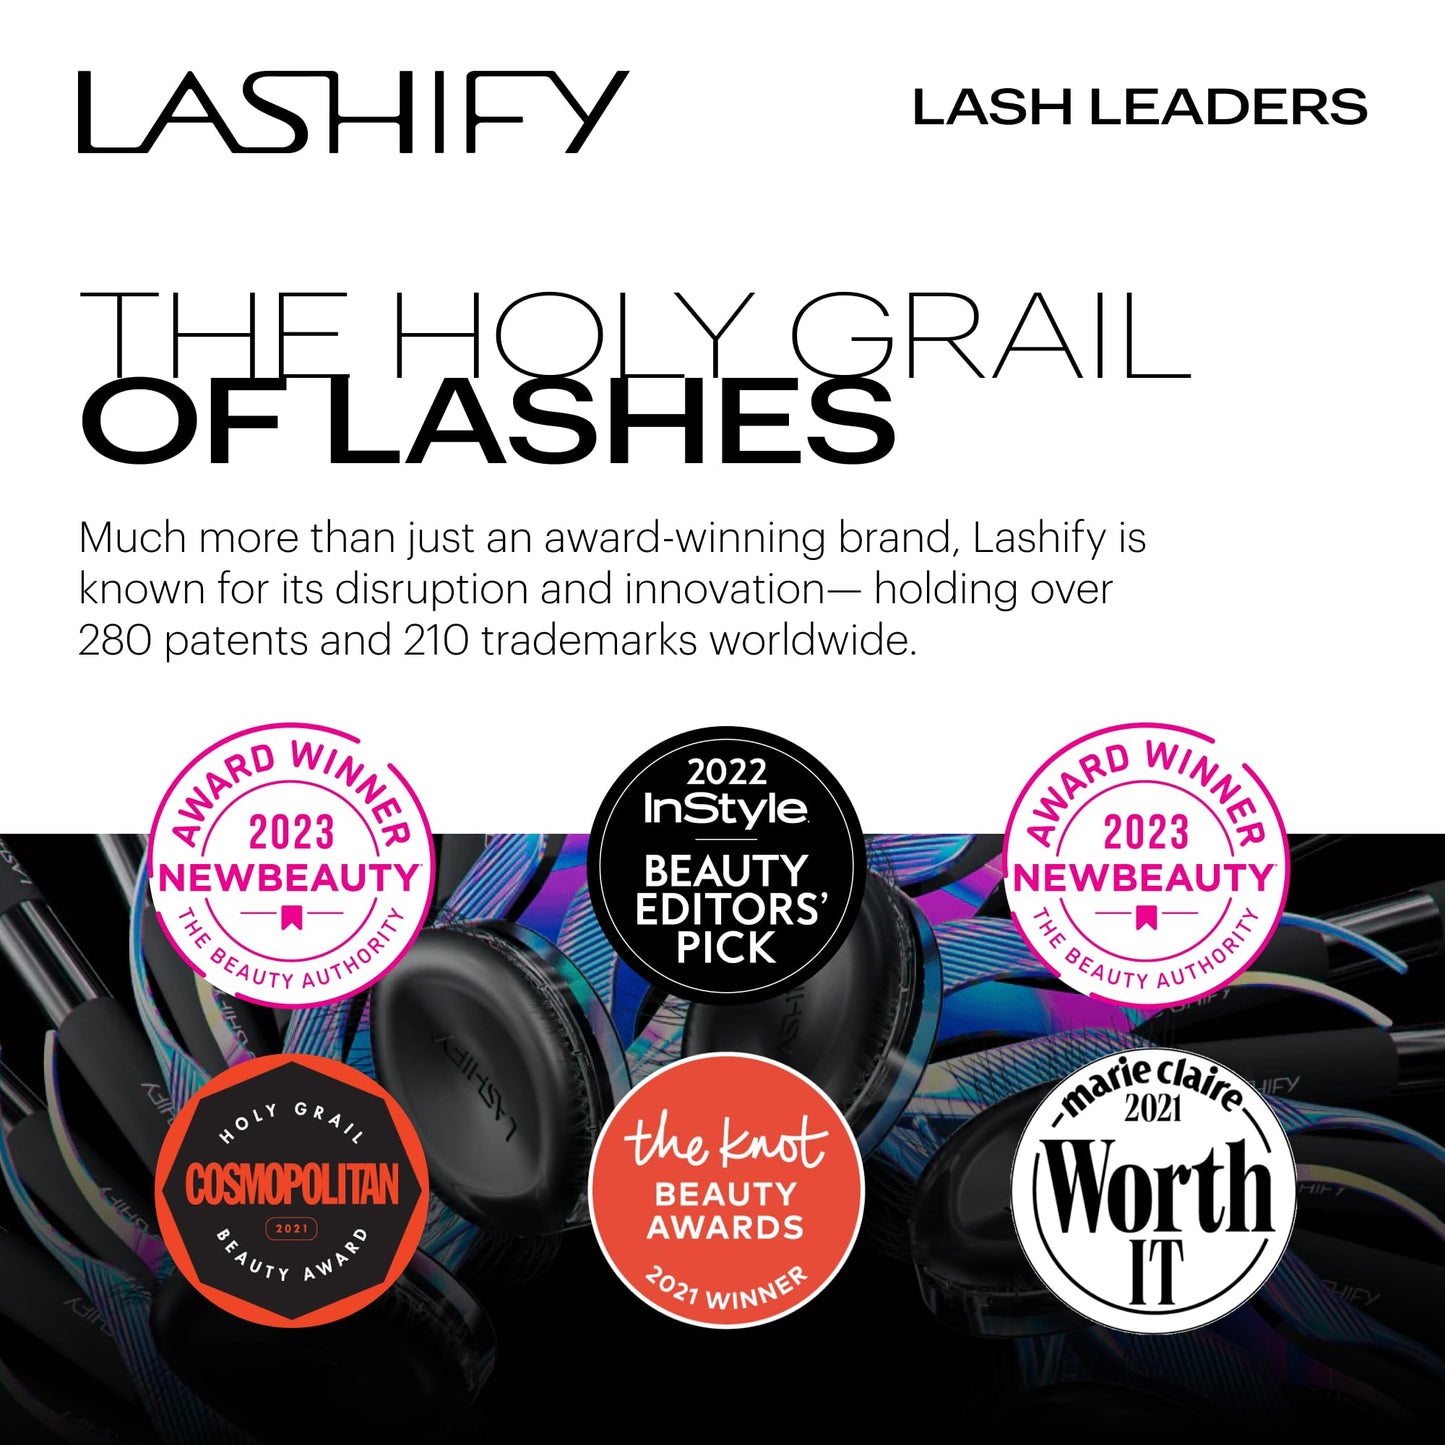 Lashify Fluffy 12mm Gossamer Eyelash Extensions Refill, Black, Easy DIY False Lashes To Add Fullness and Dimension